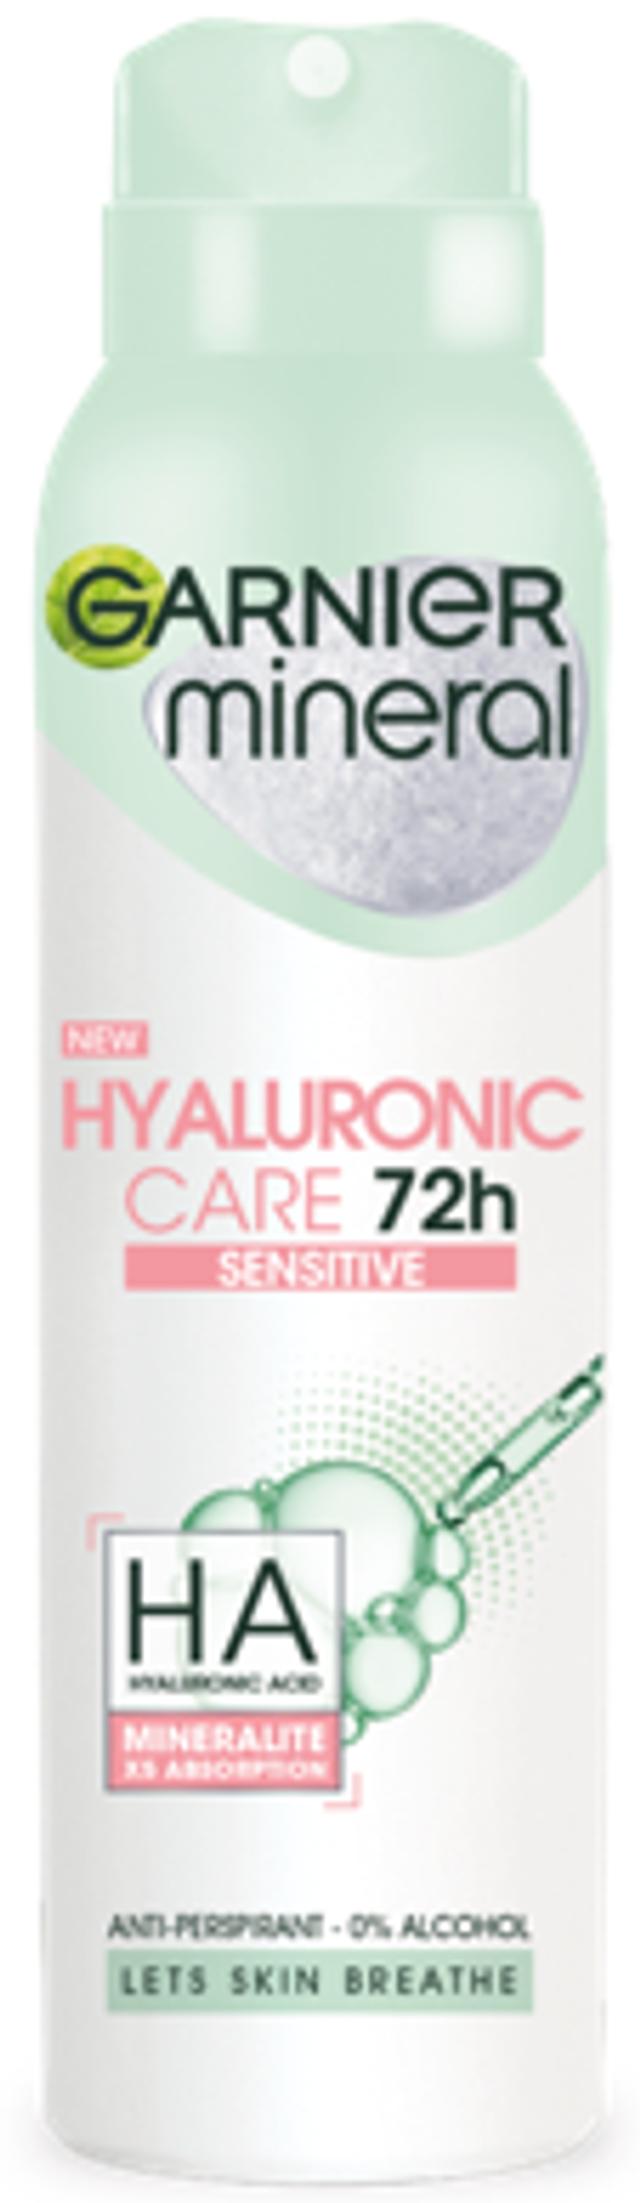 Garnier Mineral Hyaluronic Care 72h Sensitive spray deo 150 ml